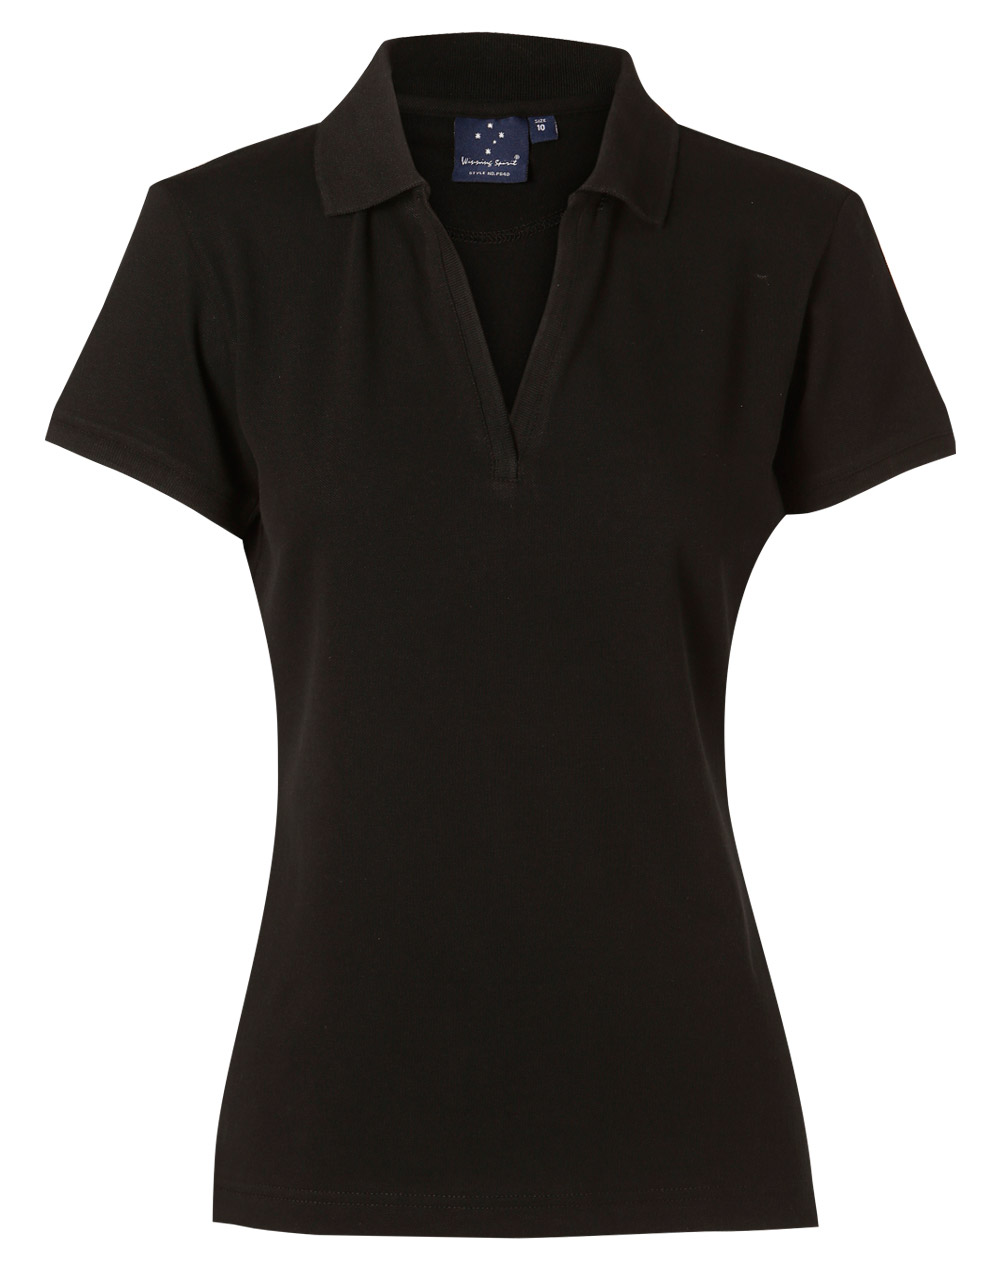 Custom (Black) Long Beach Ledies Polo Shirts Online Perth Australia